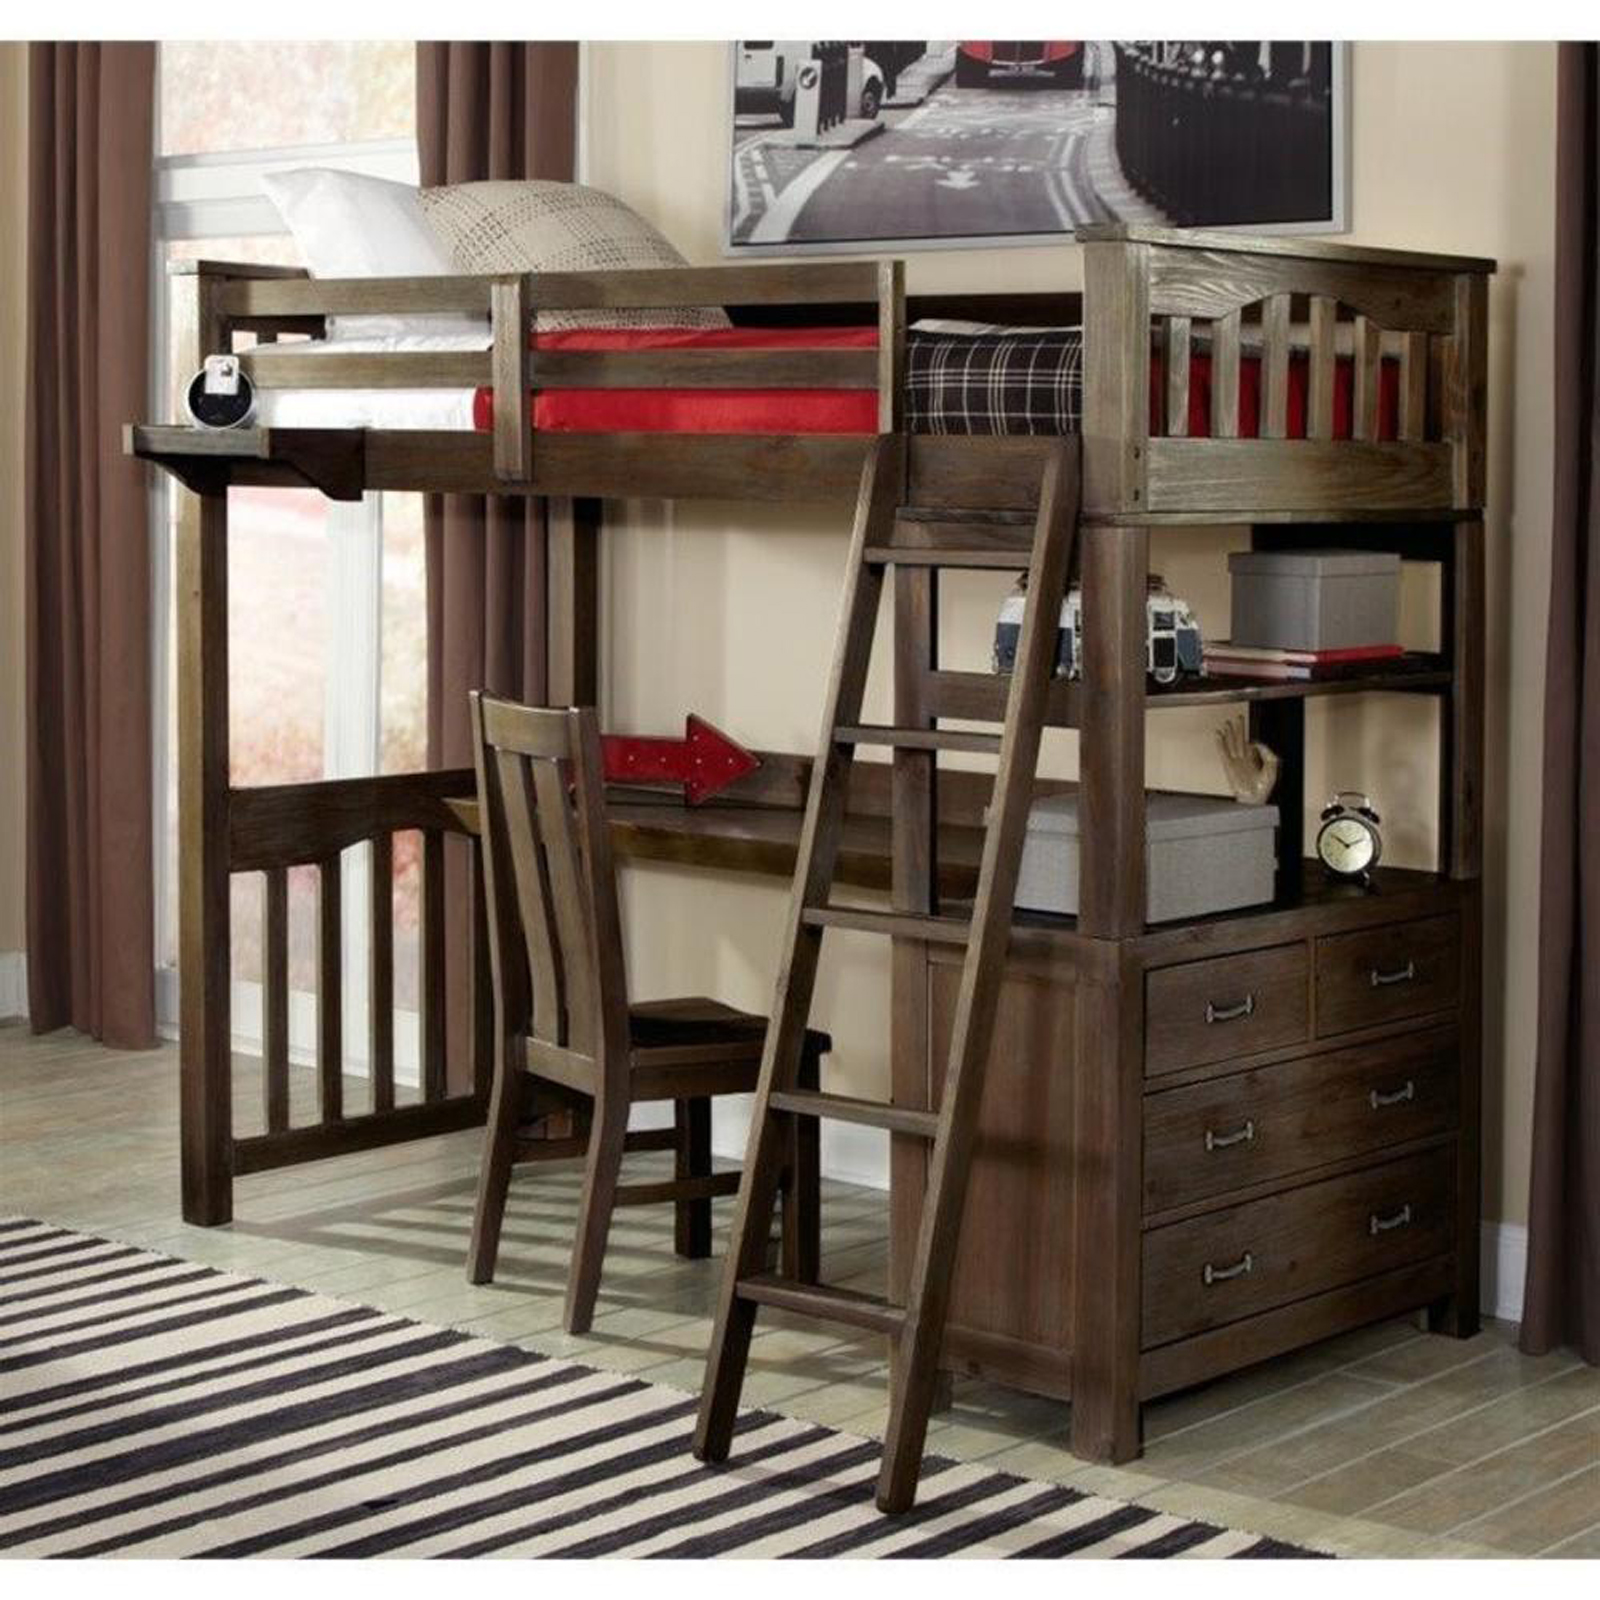 NE Kids 70in. x 82.5in. x 43.5in. Twin Loft Bed with Desk - Espresso